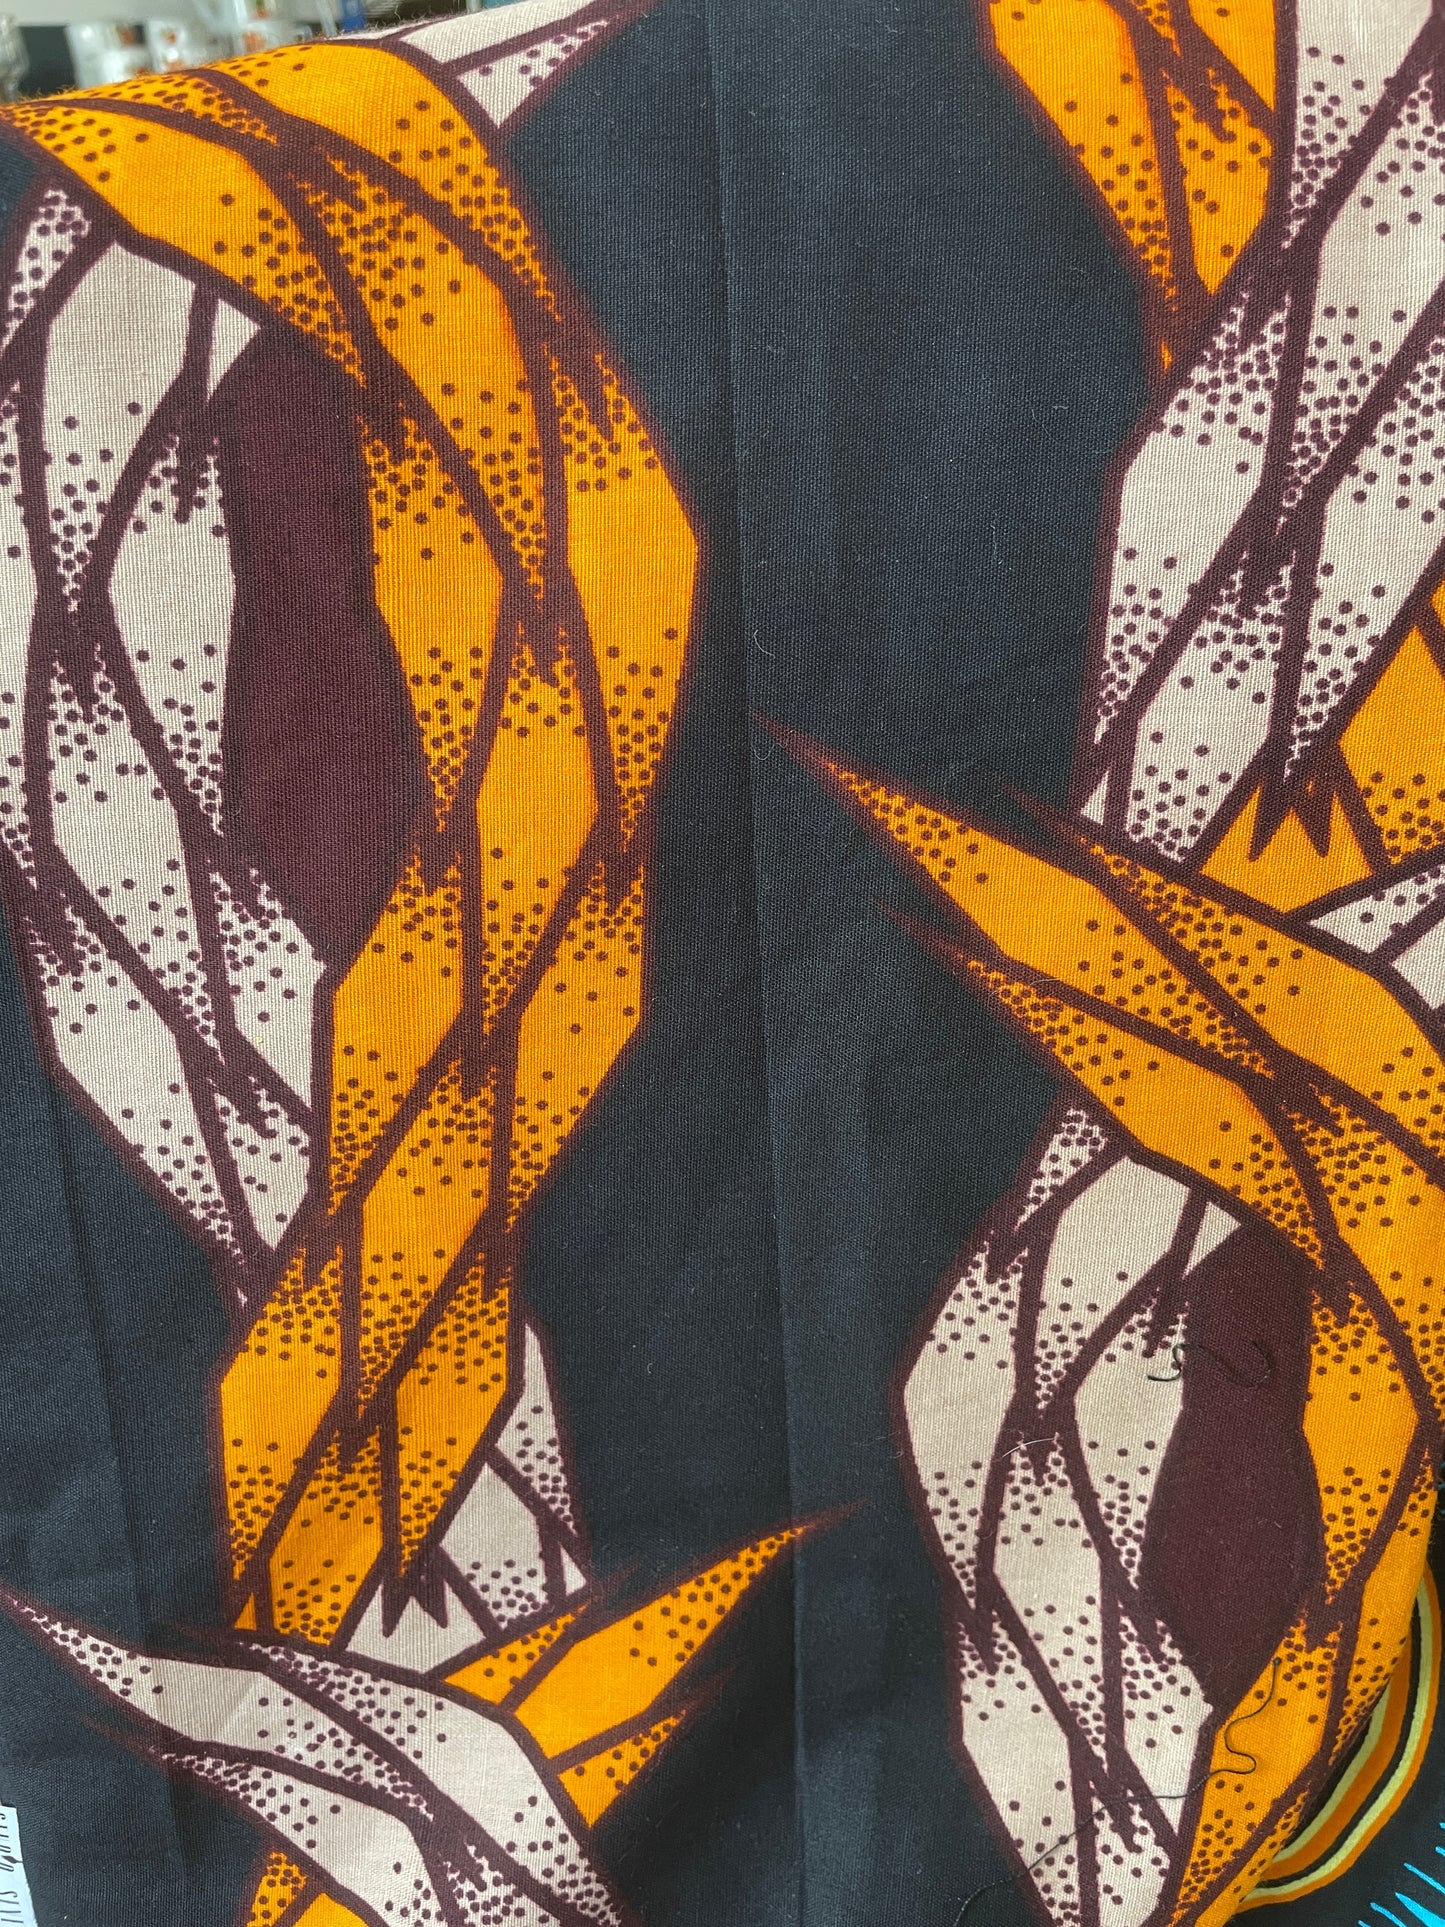 African kitenge fabric - unique exercise/yoga mat bag (navy/orange)